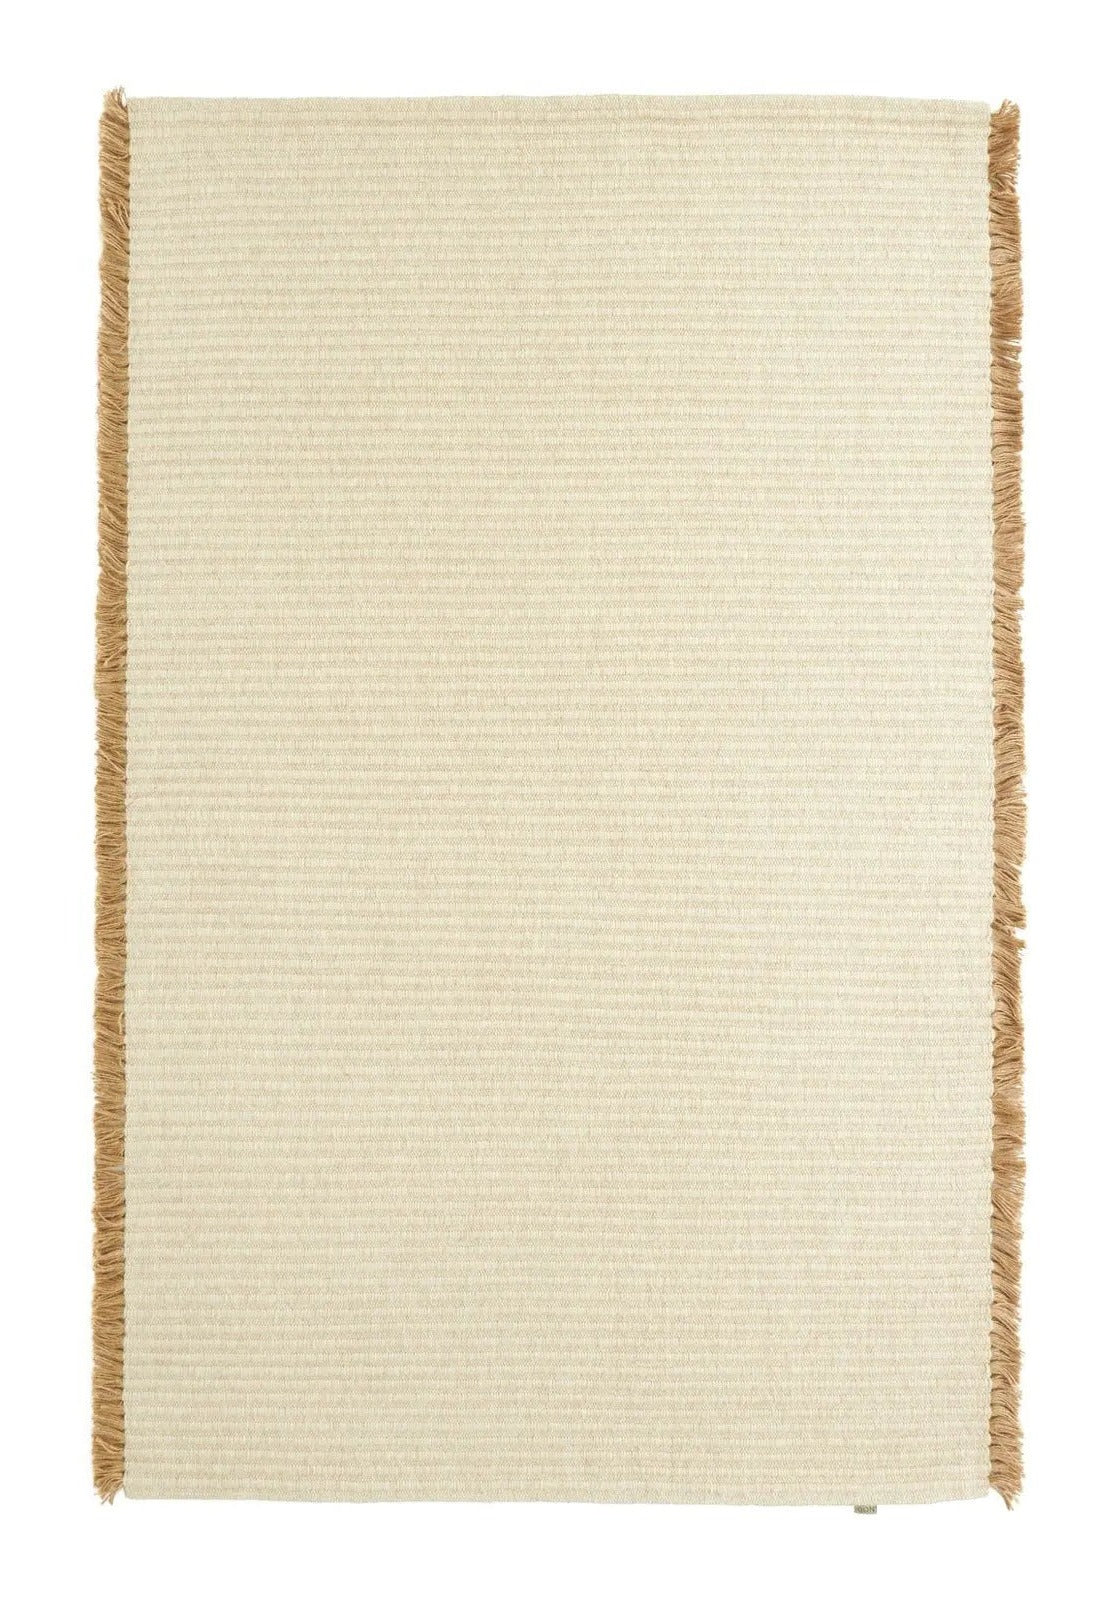 Tasseled Wool Oatmeal Sample - NODI HANDMADE RUGS